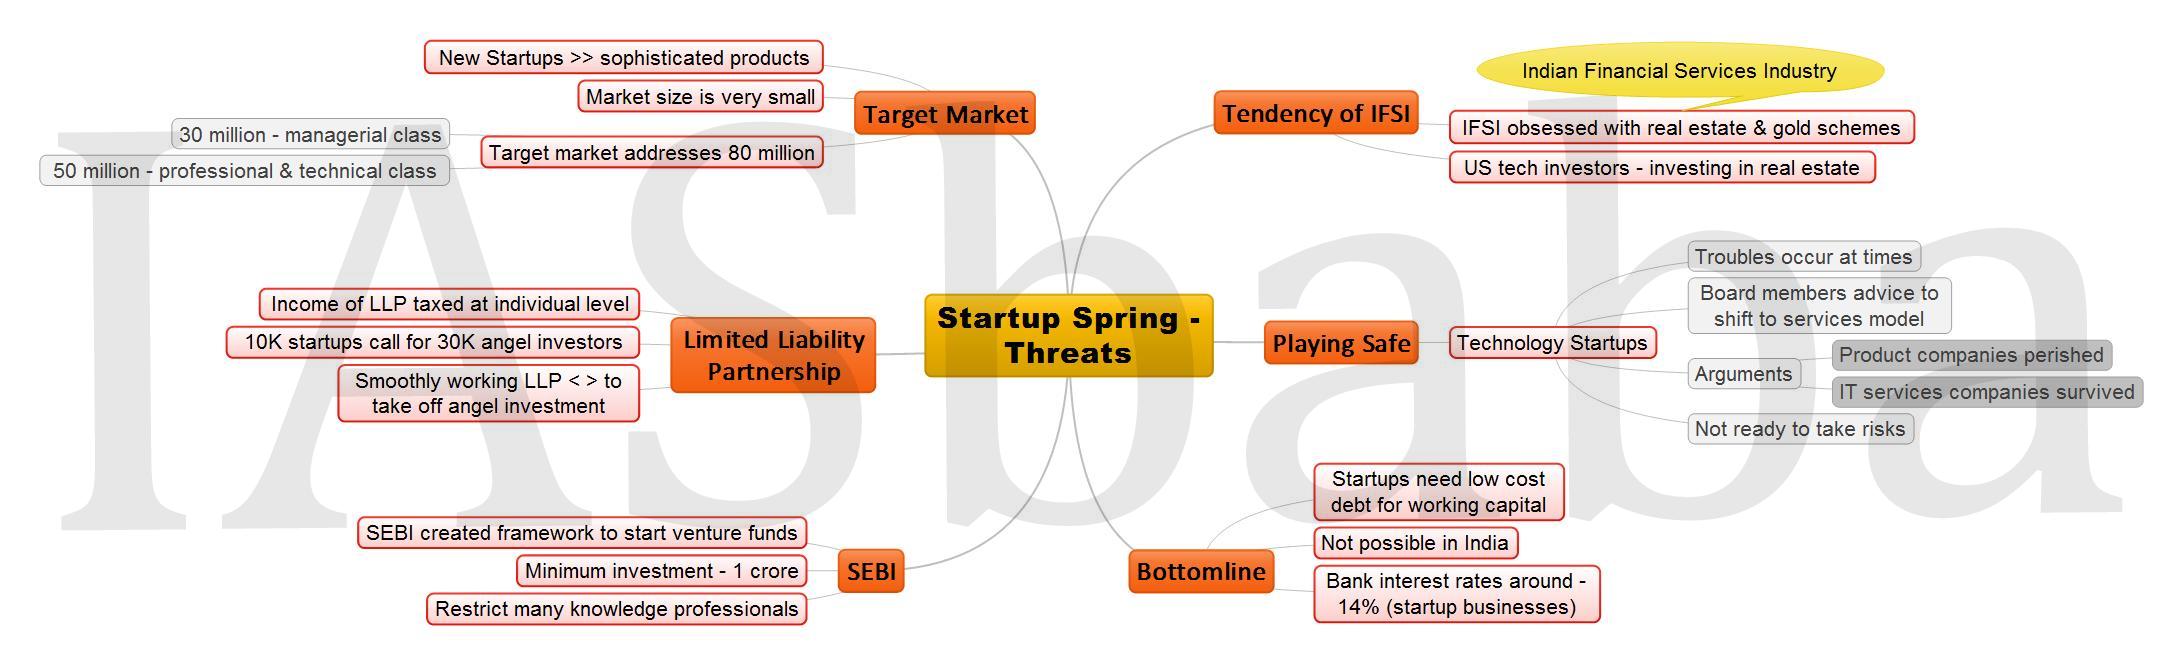 Startup Spring Threats JPEG